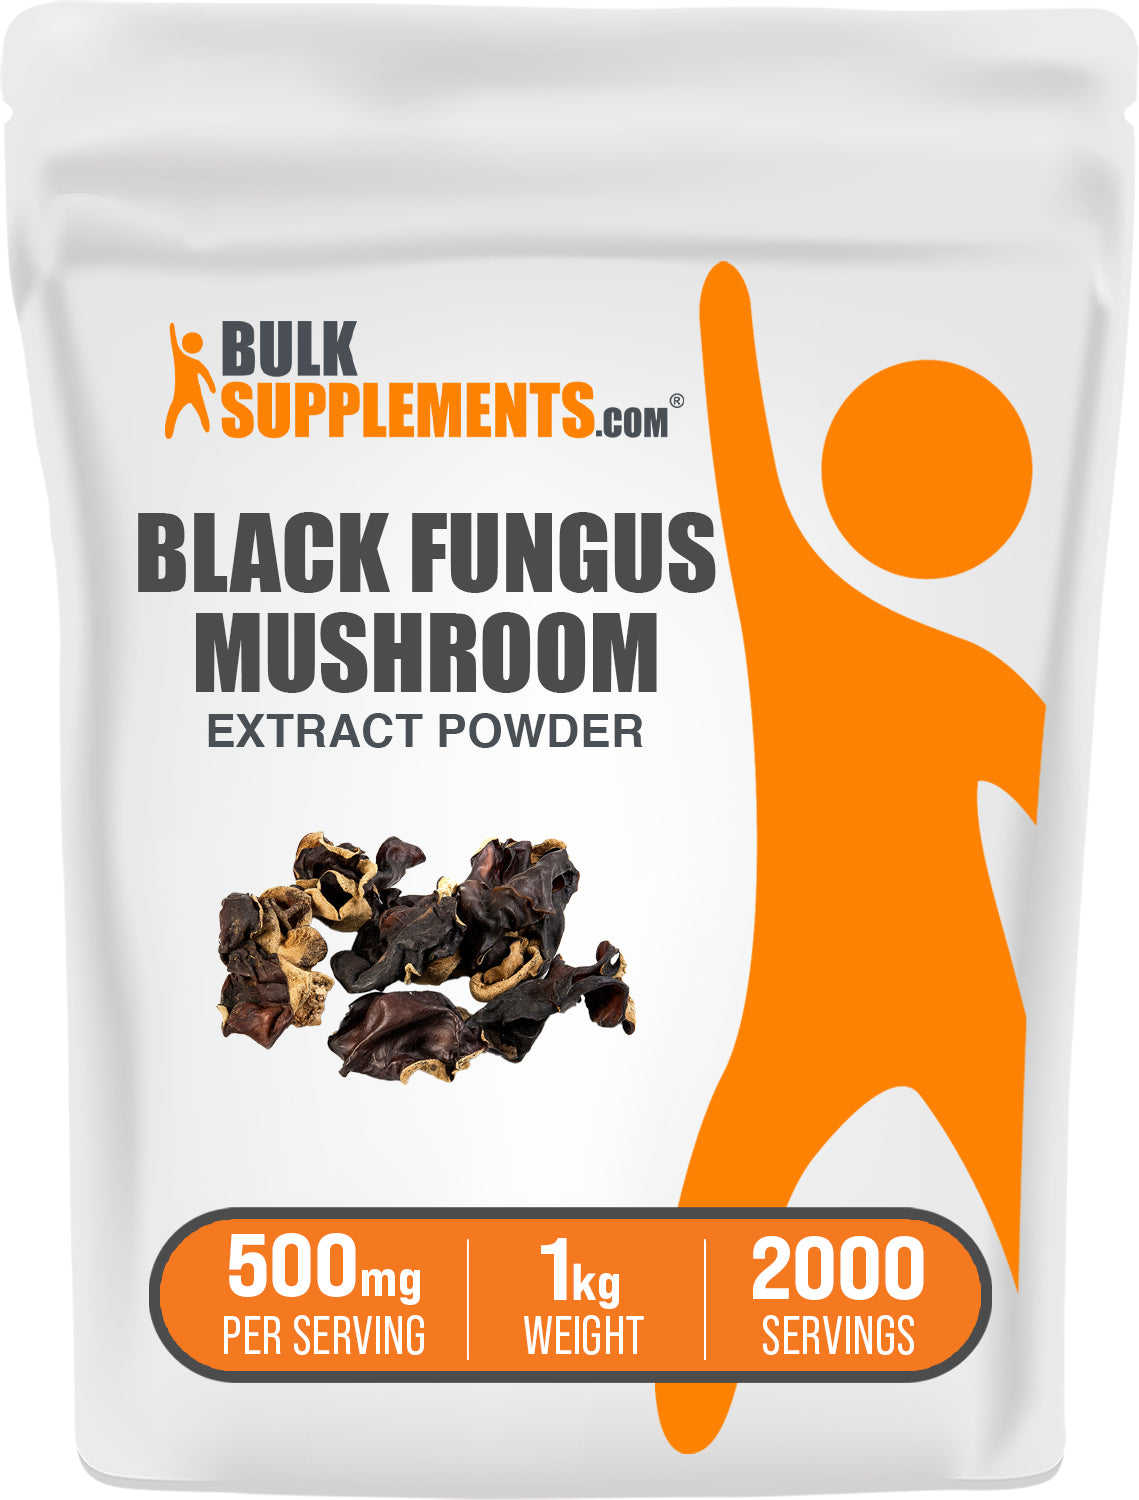 BulkSupplements.com Black Fungus Mushroom Extract Powder 1kg Bag